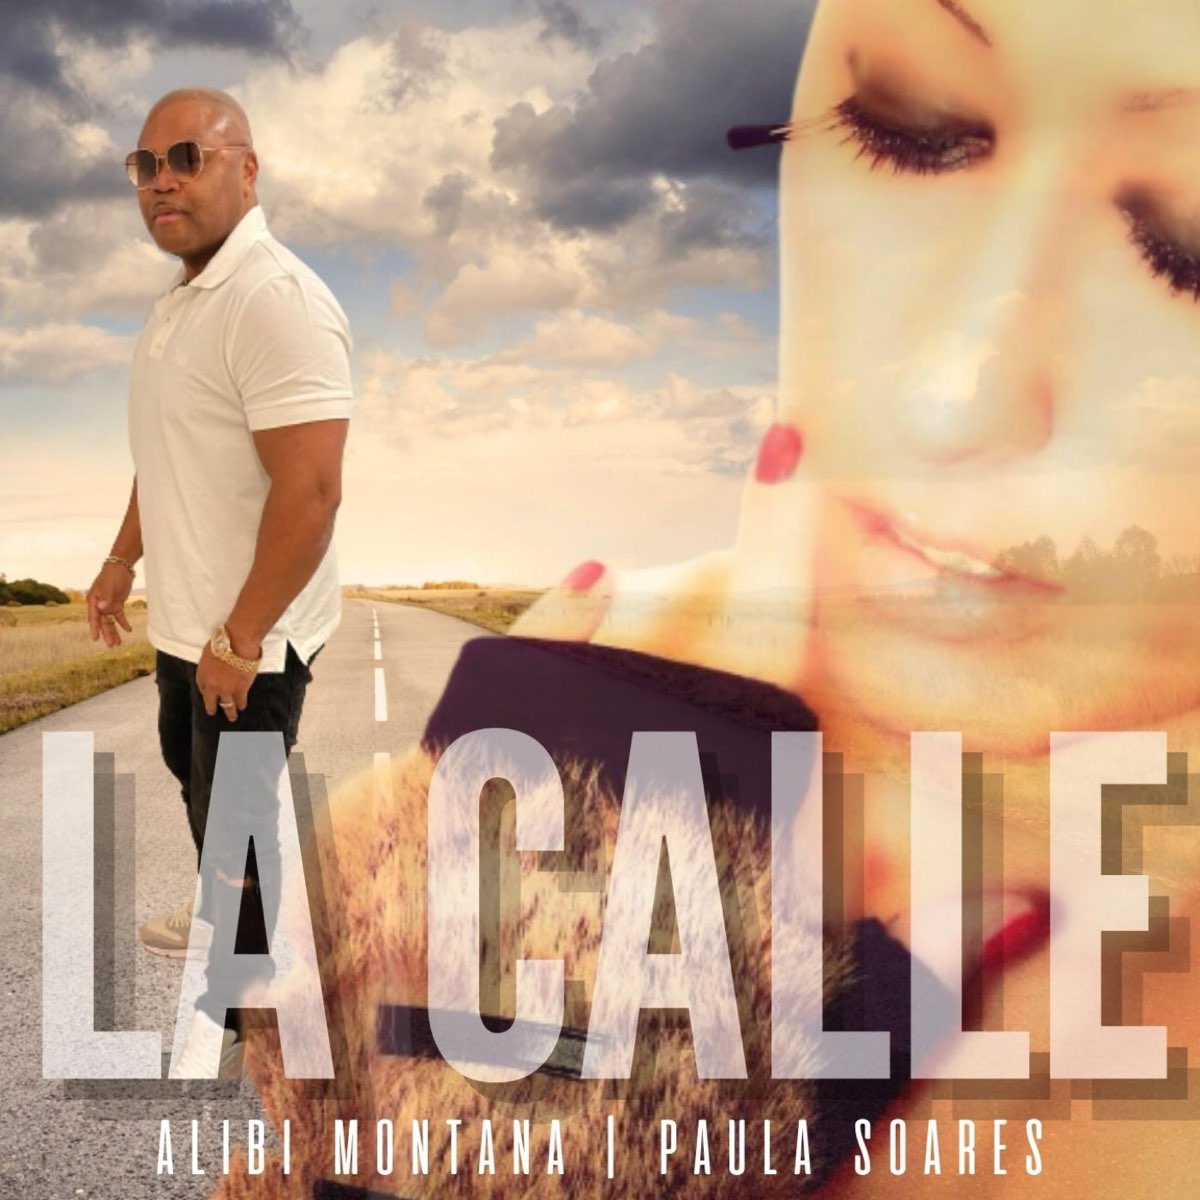 La Calle - Single by Alibi Montana on Apple Music